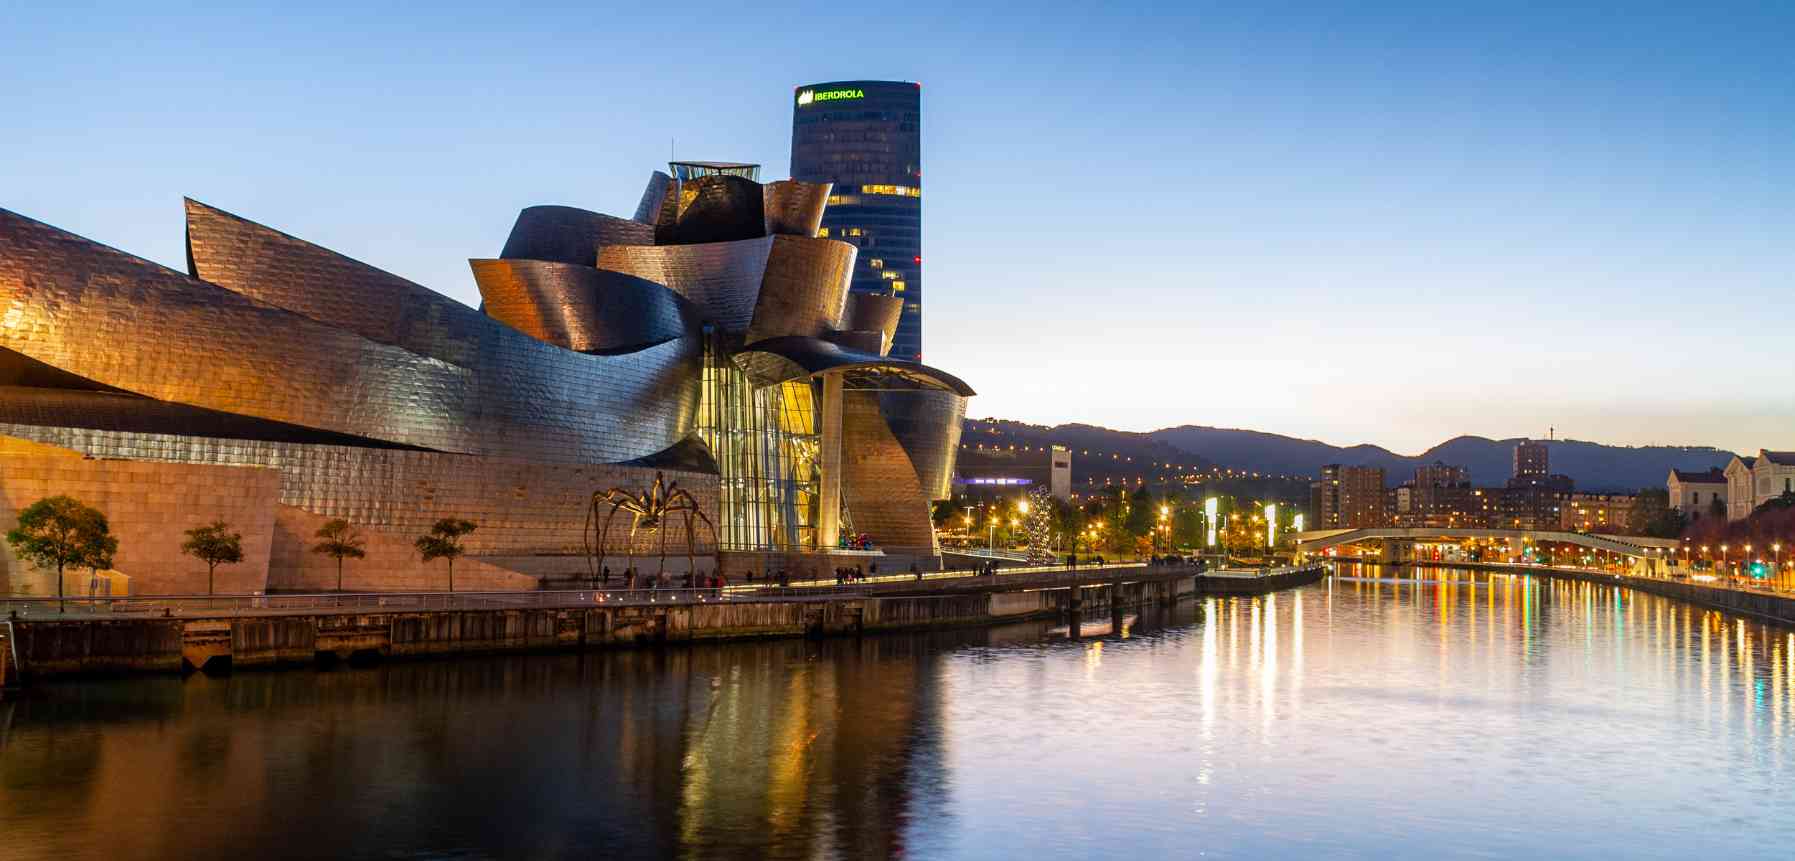 Visit the Guggenheim Museum in Bilbao